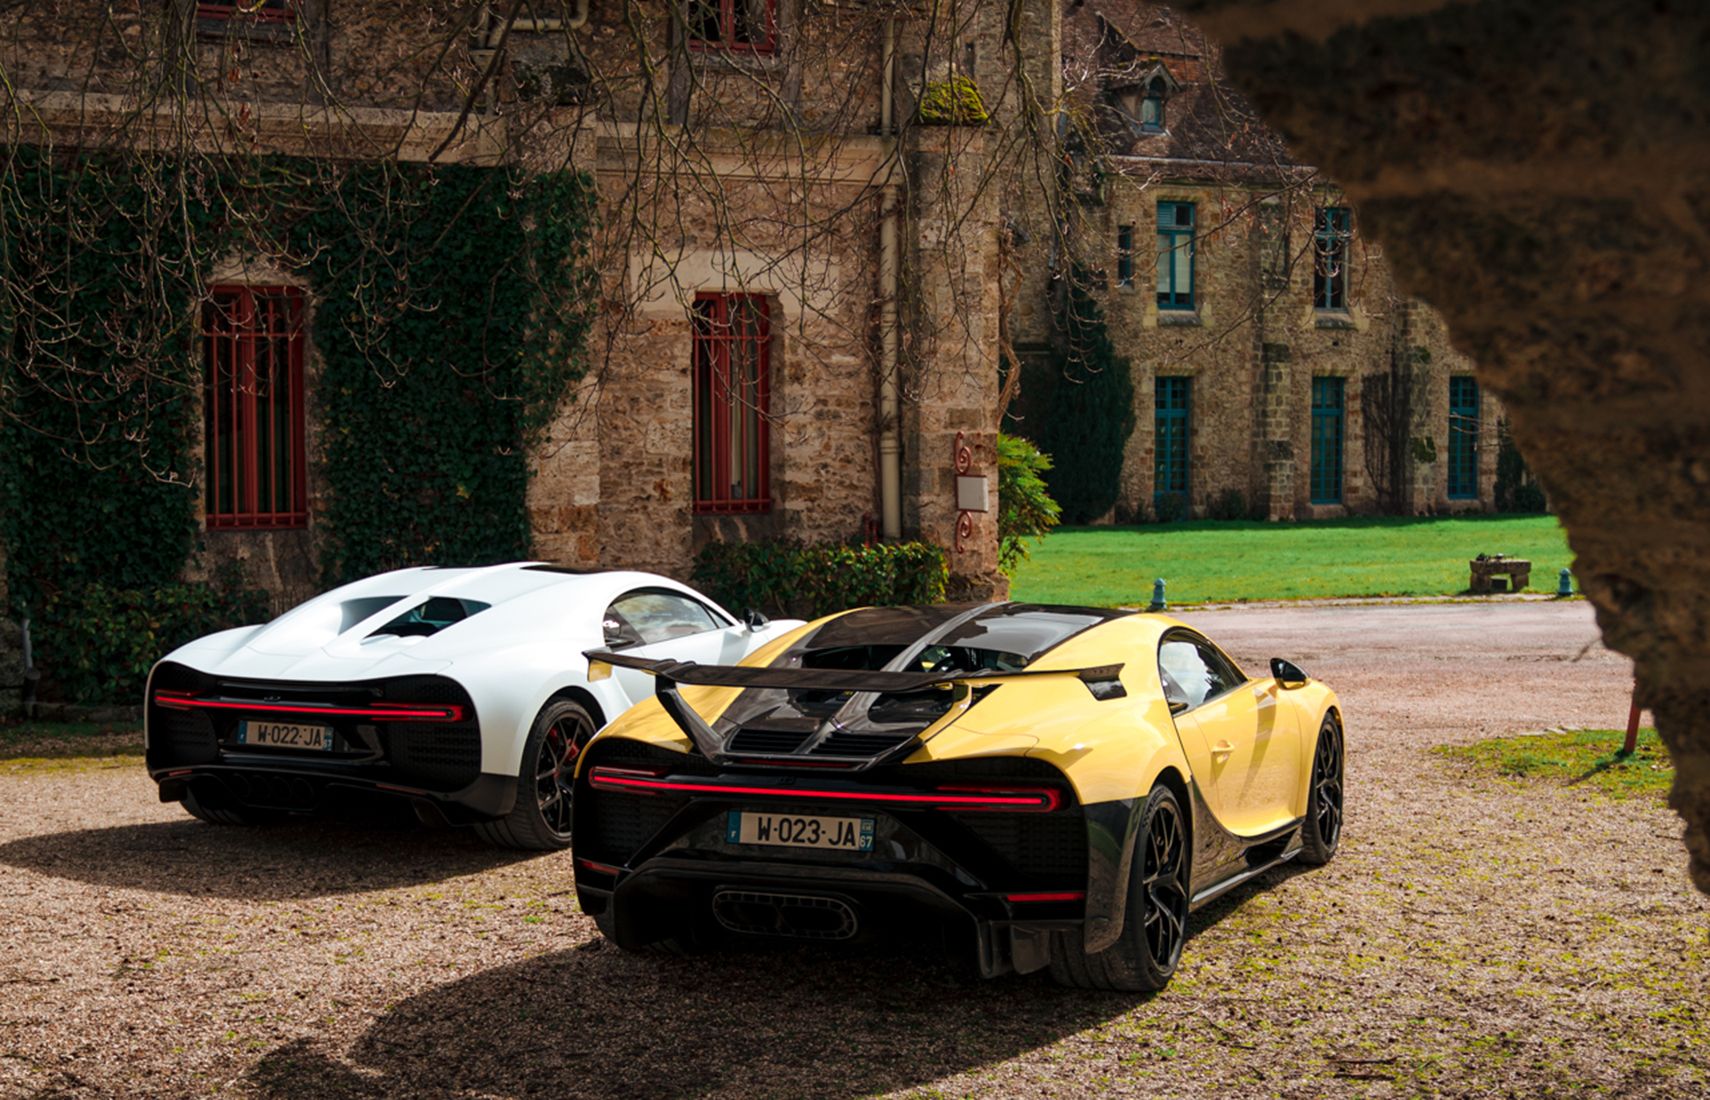 Bugatti Paris duo